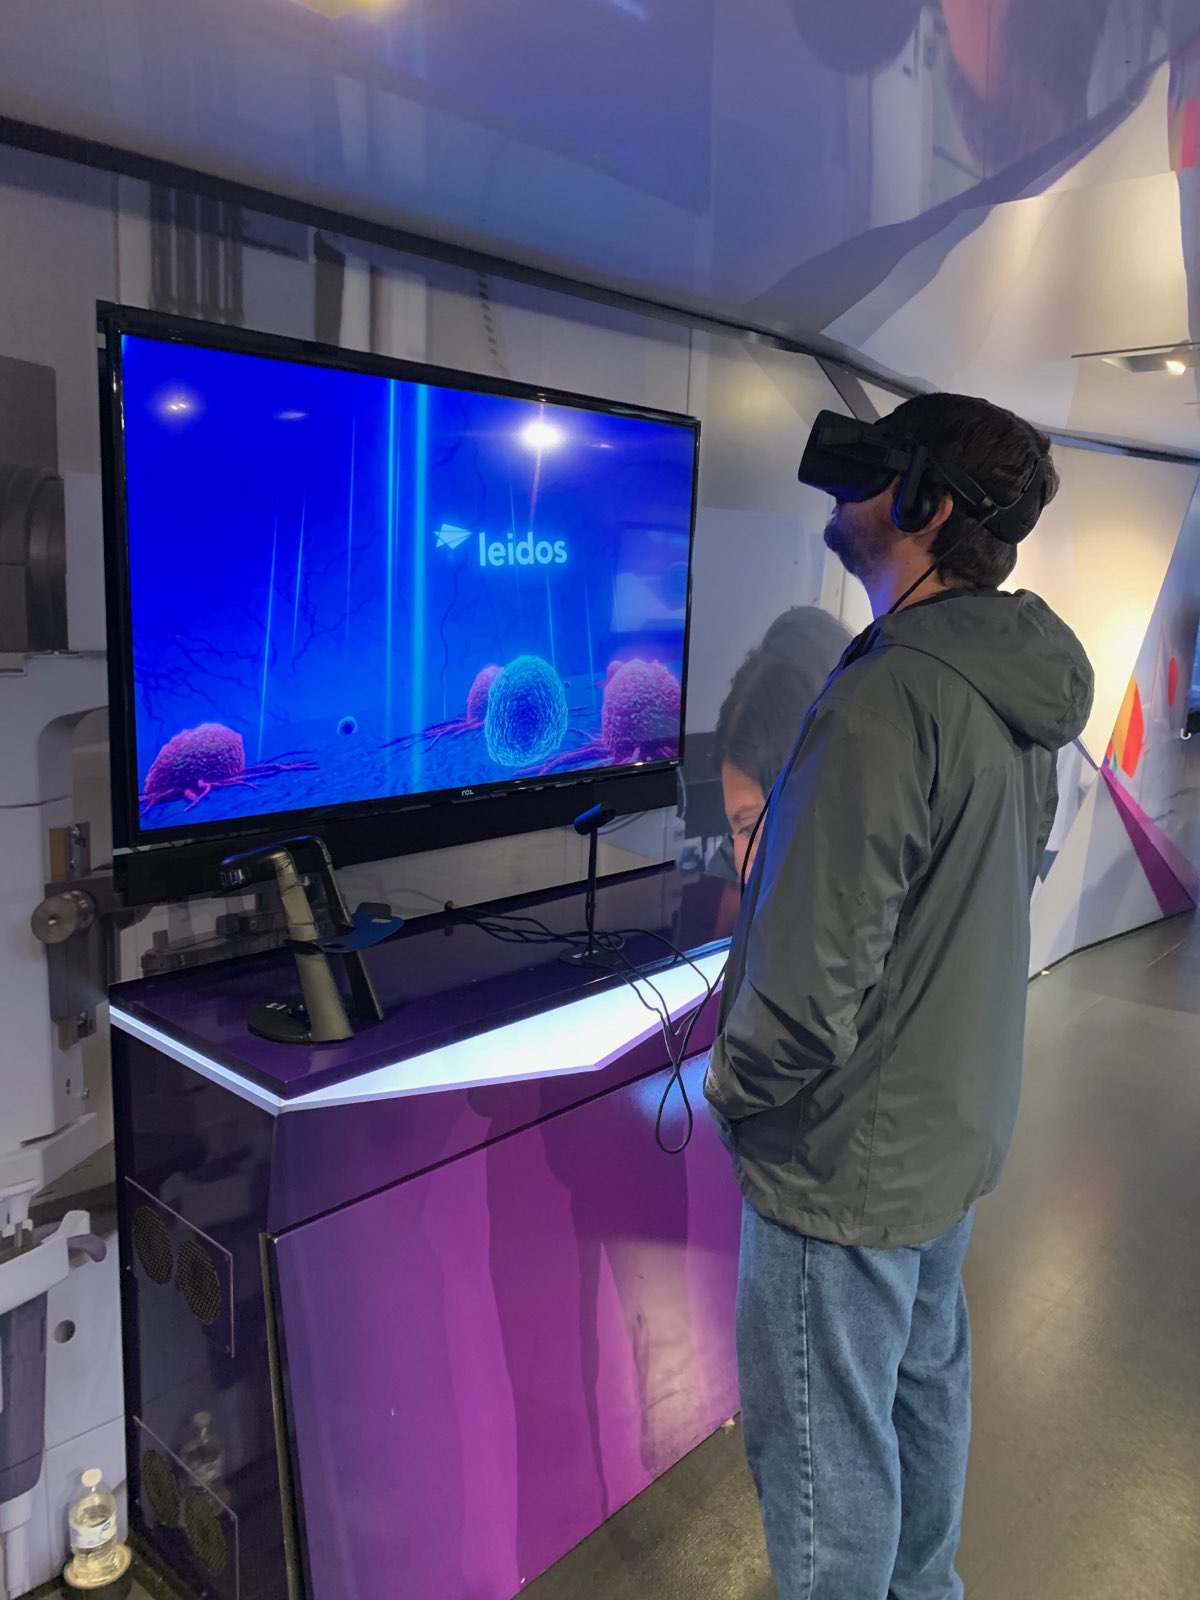 man using a VR